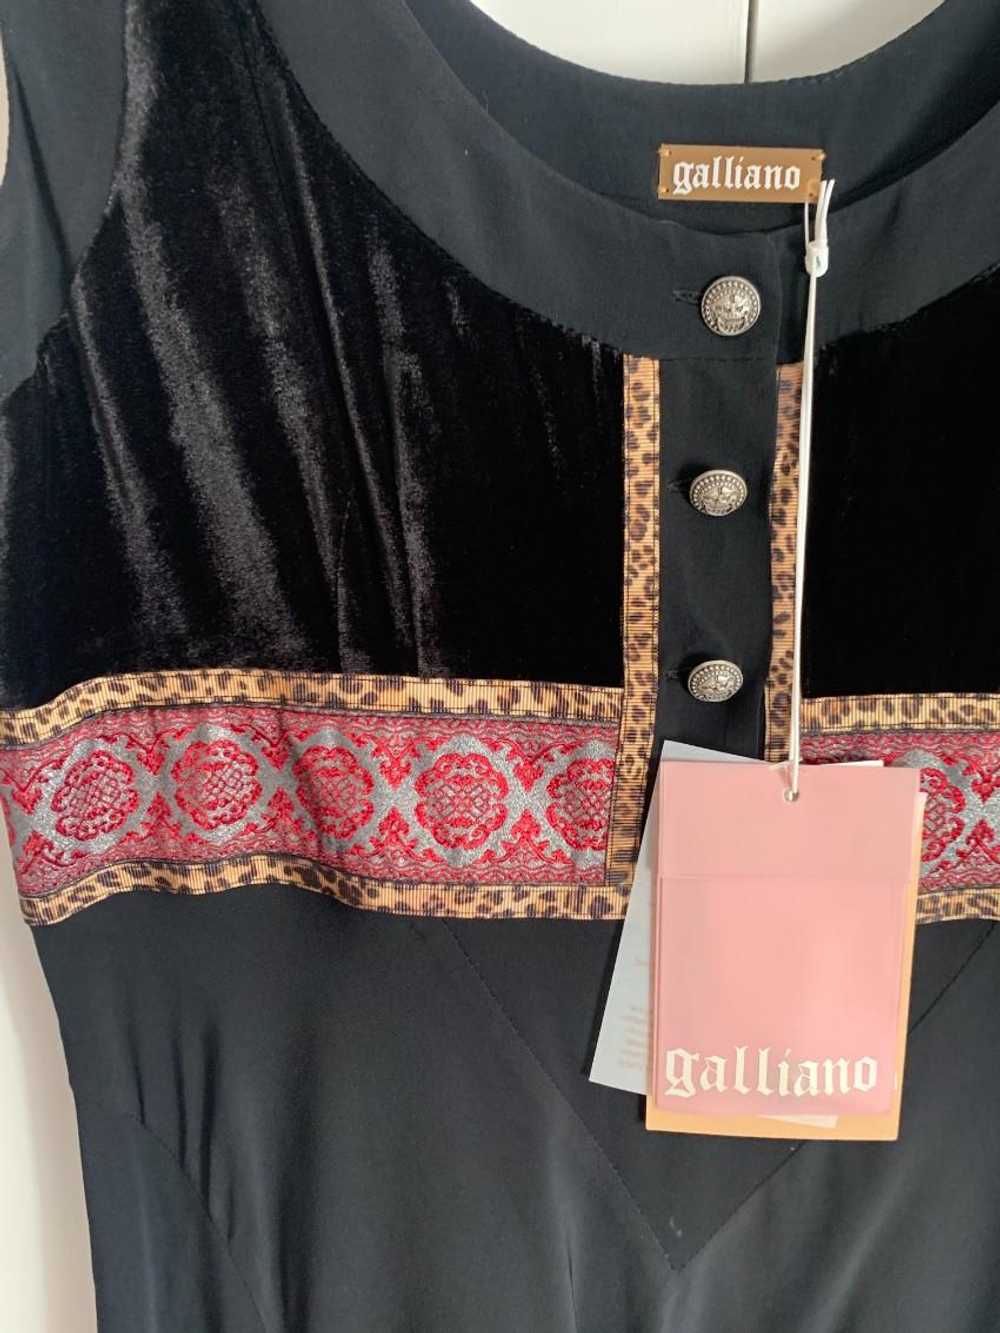 Galliano Galliano Black Satin Embroidered Dress - image 4